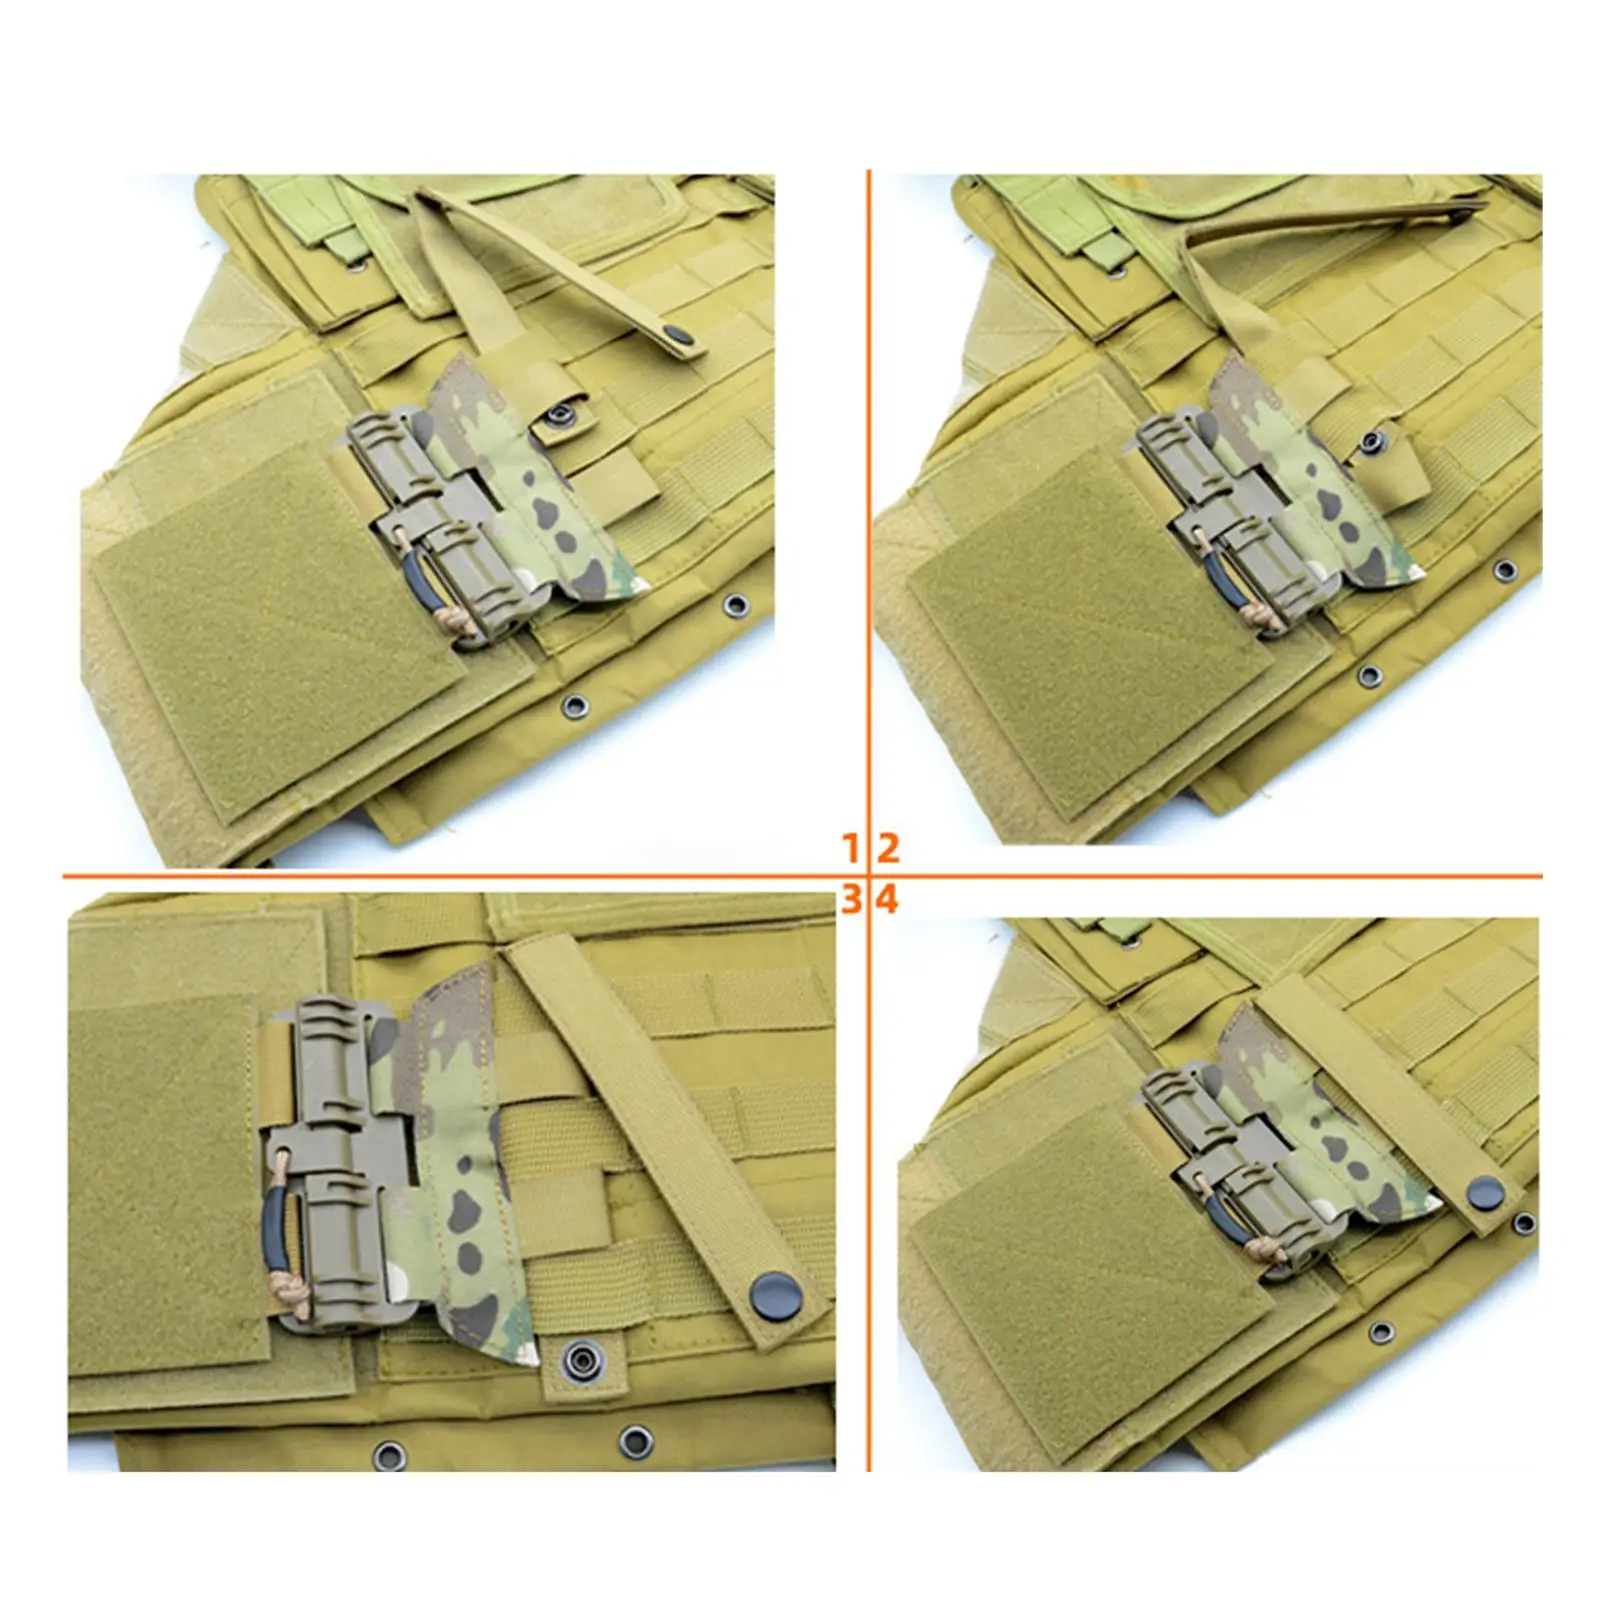 Vest Quick Release Buckle Set Cummerbund Adapter Universal Quick Assembly Replacement Dismountable Belt